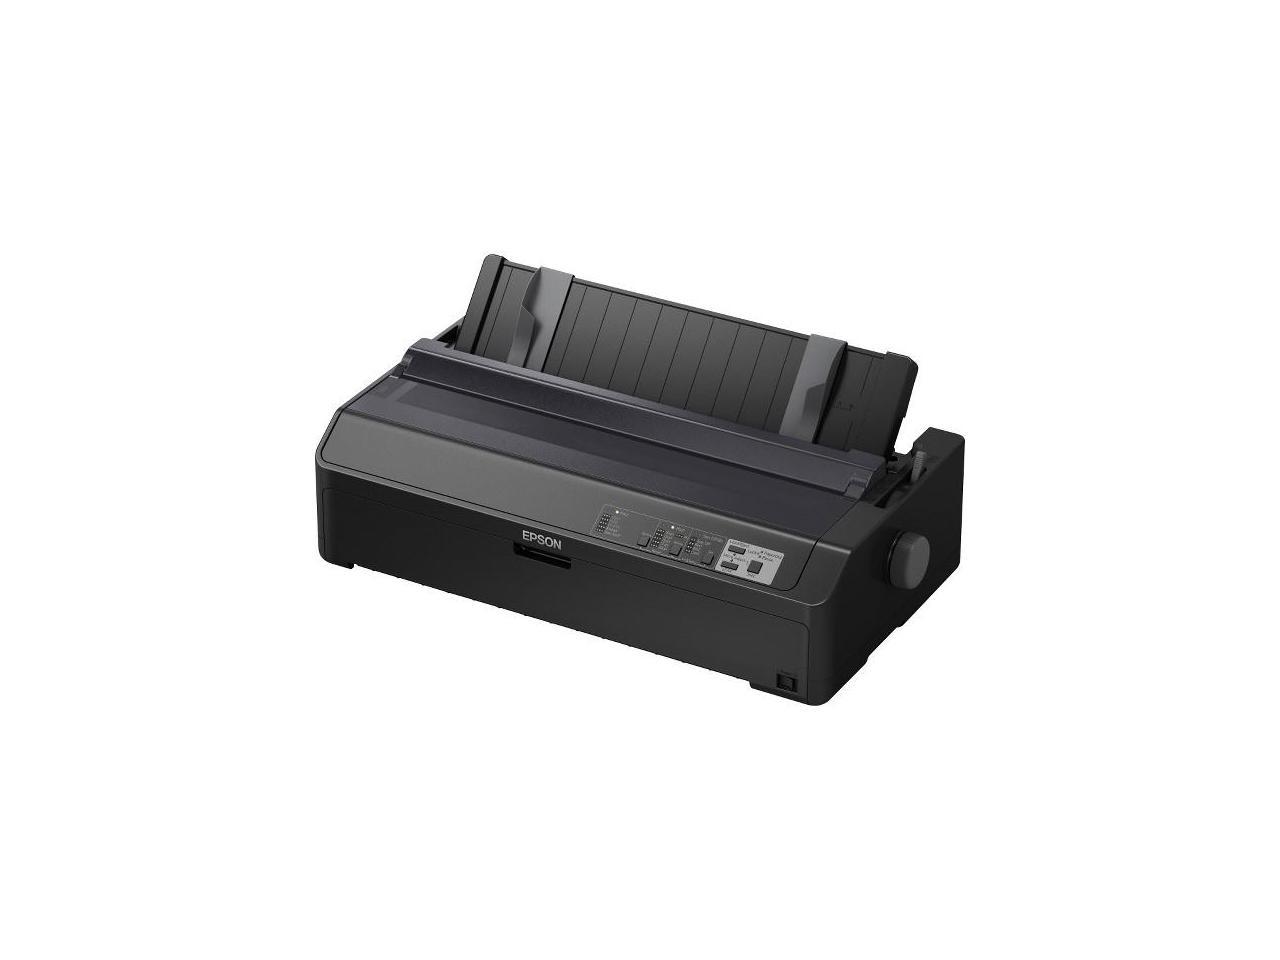 EPSON FX-2190II C11CF38201 Wide-format Impact Printers Built for Demanding Print Environments